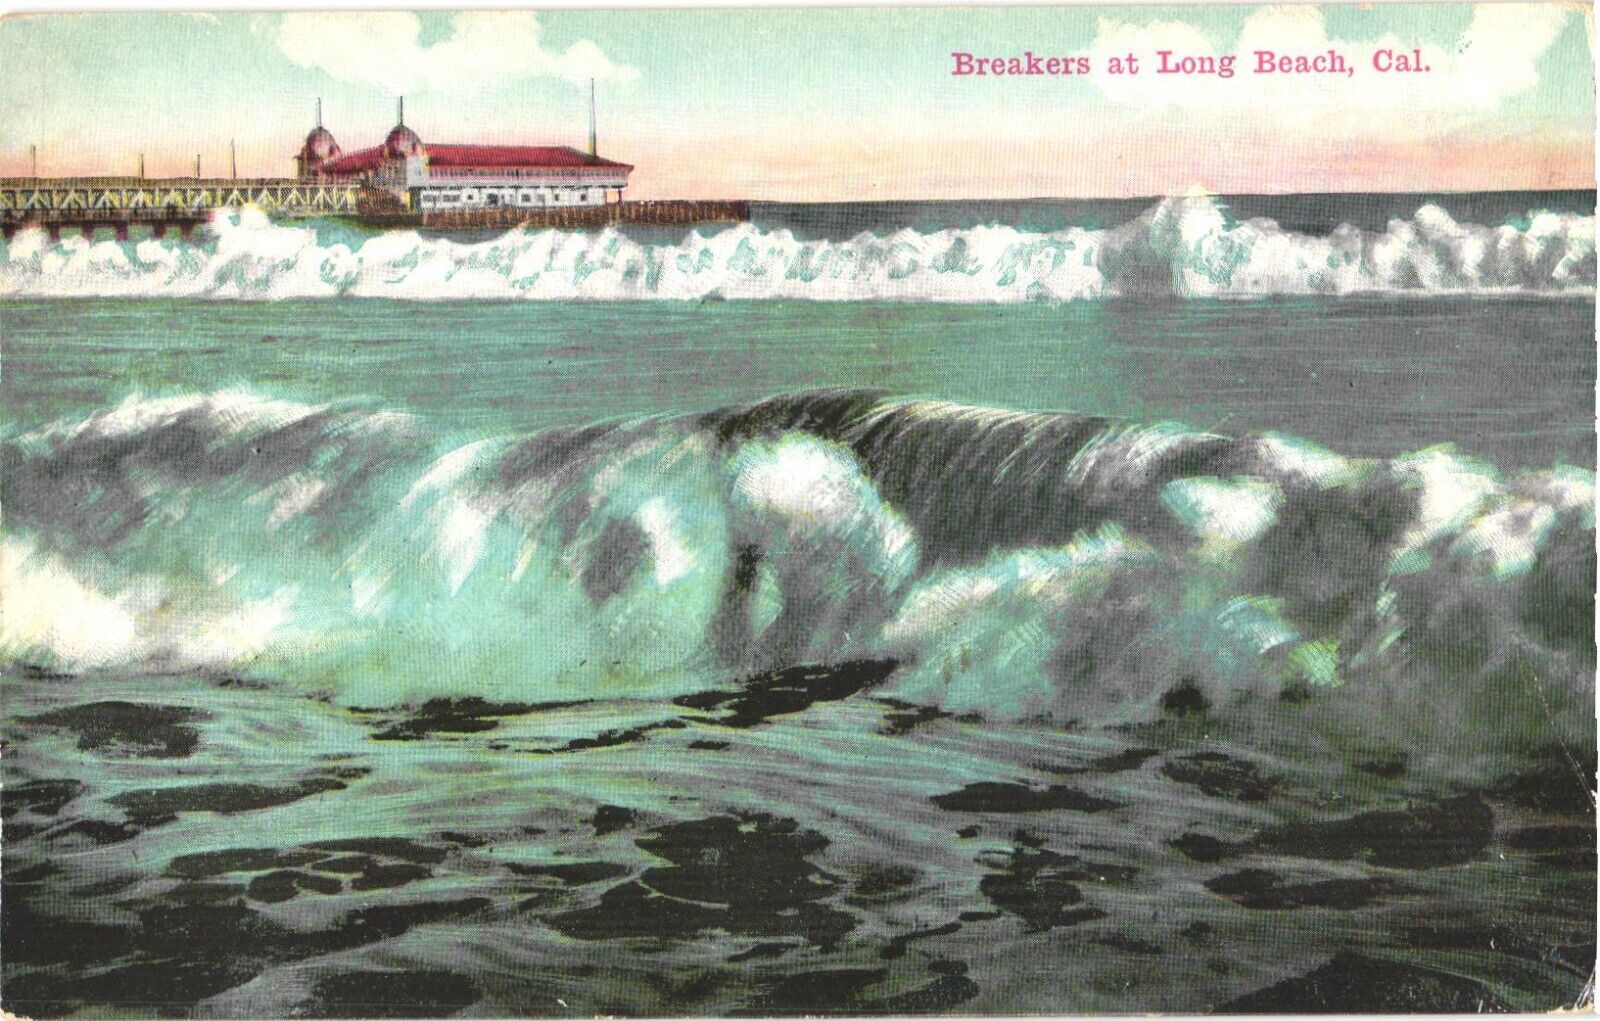 View of Huge Waves, Breakers at Long Beach, California Postcard